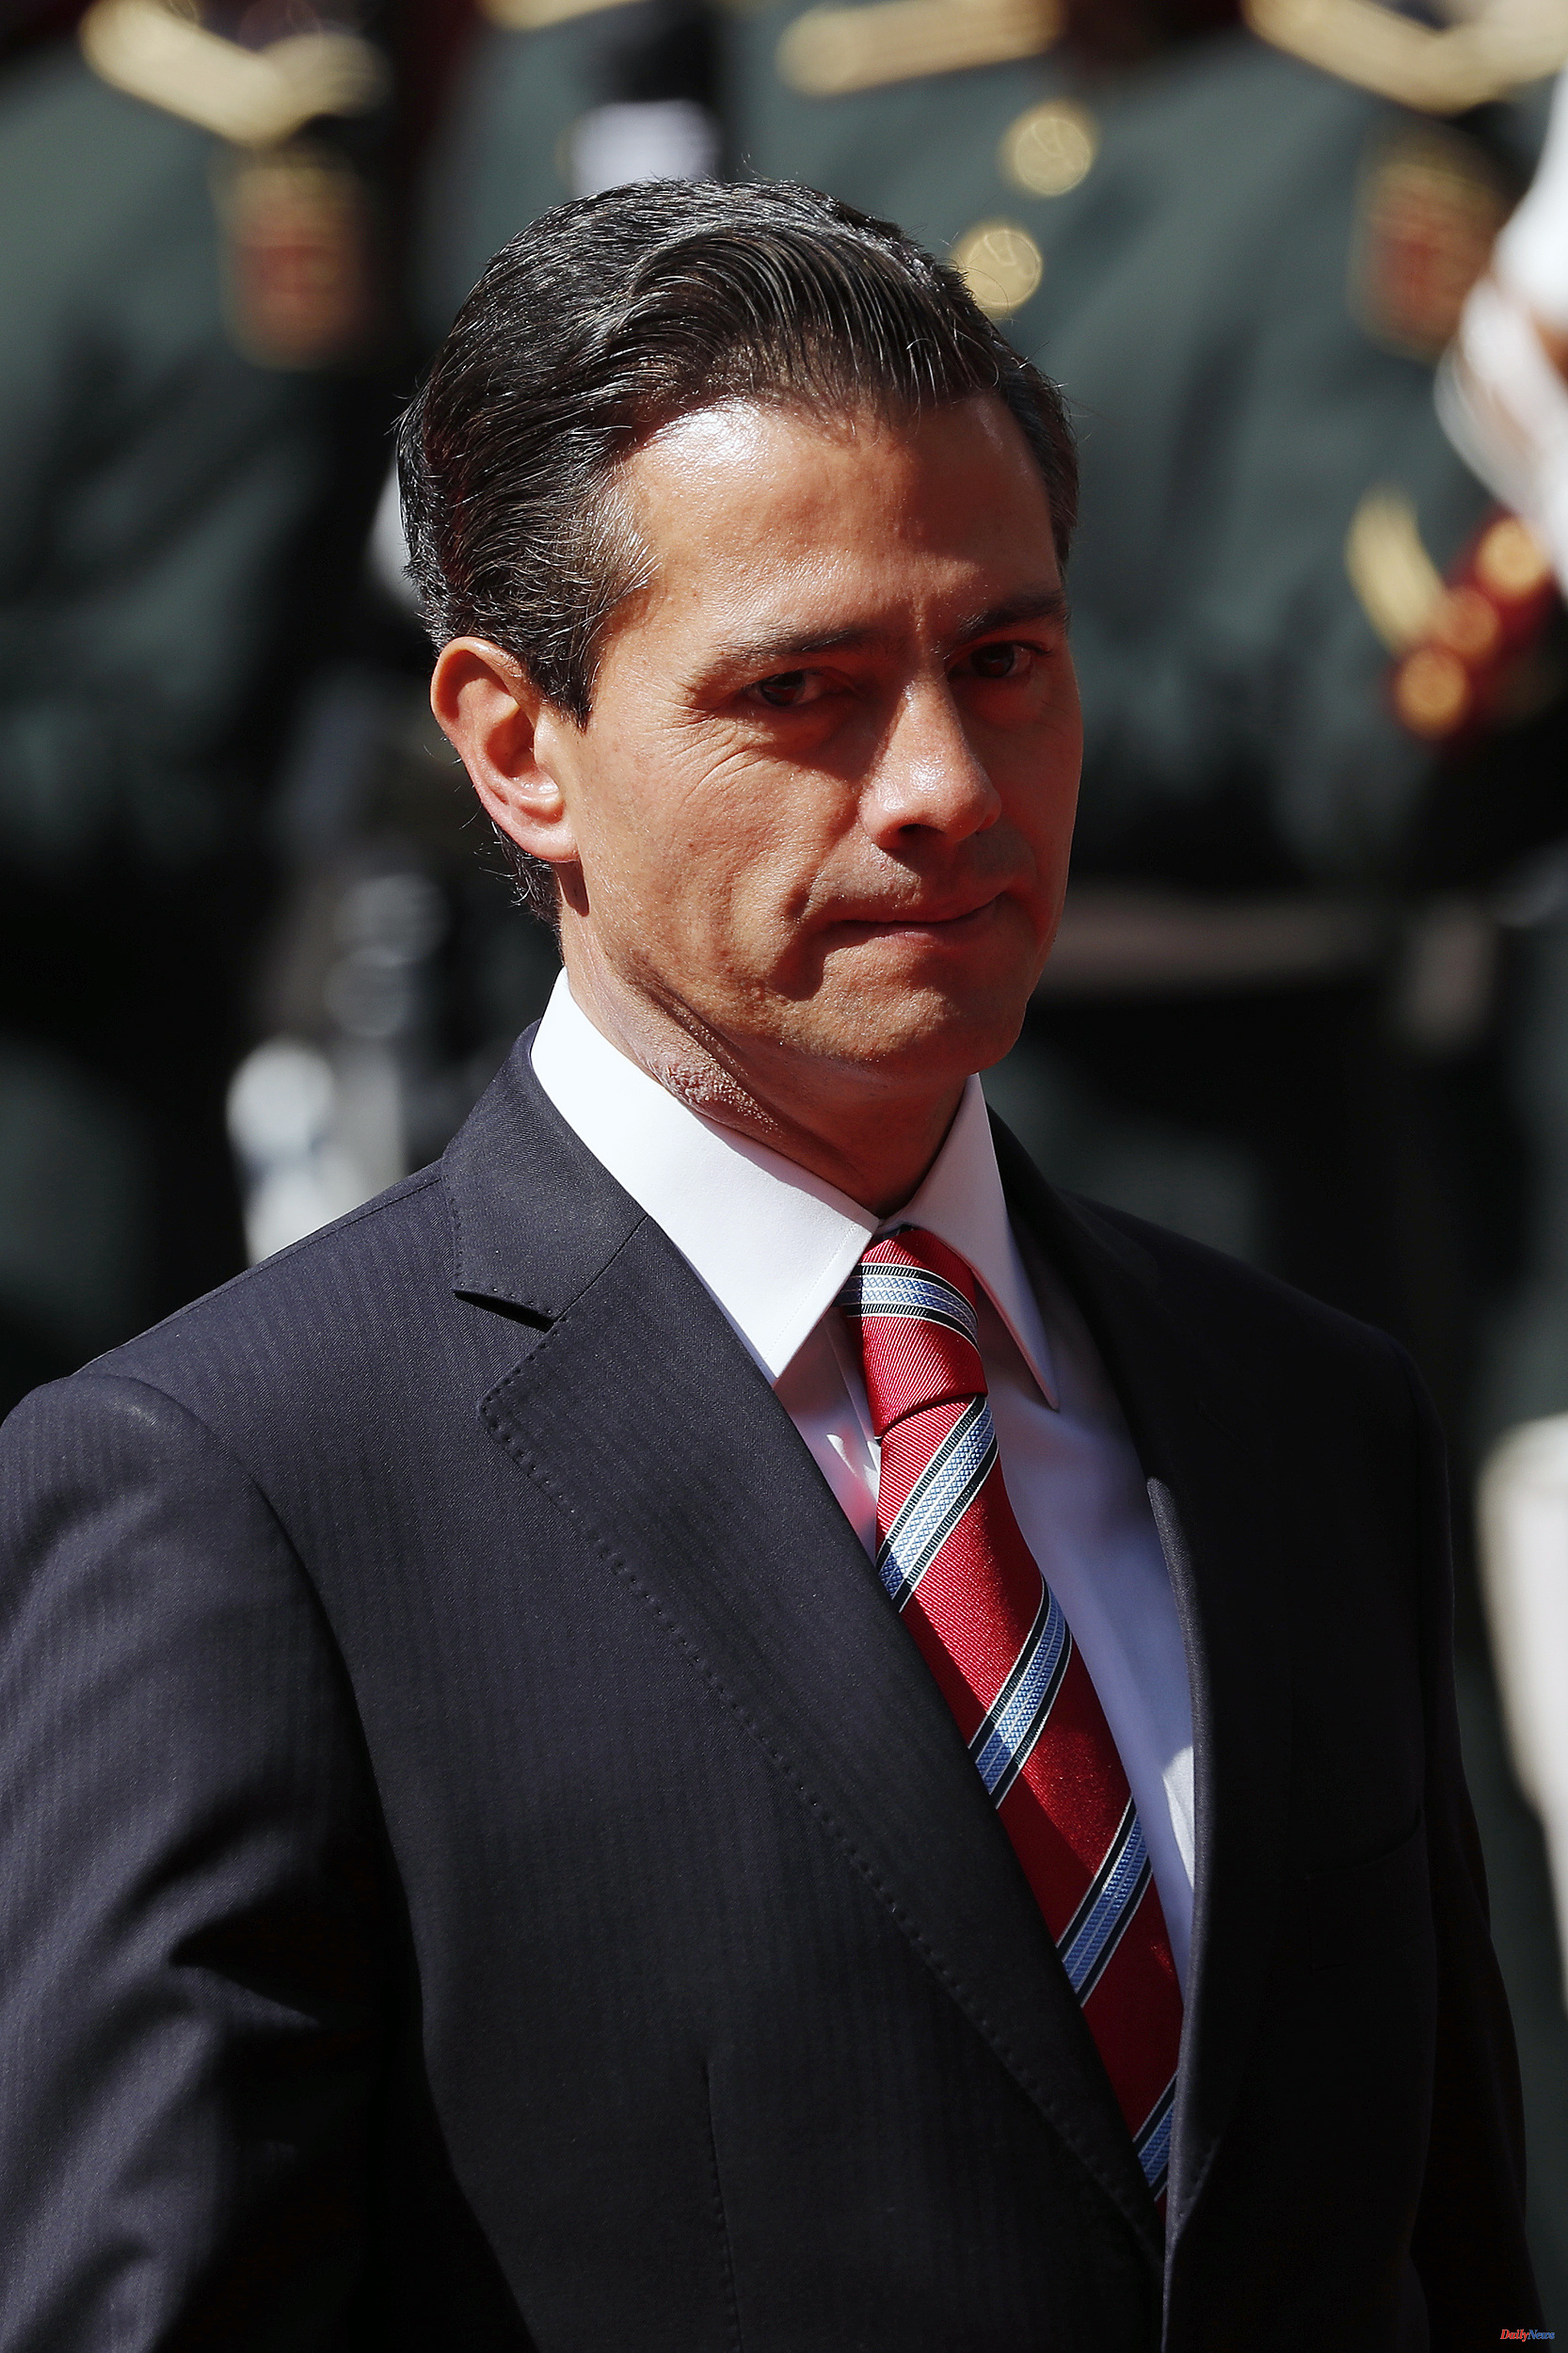 LOC The former Mexican president Peña Nieto breaks up with his partner, the model Tania Ruiz